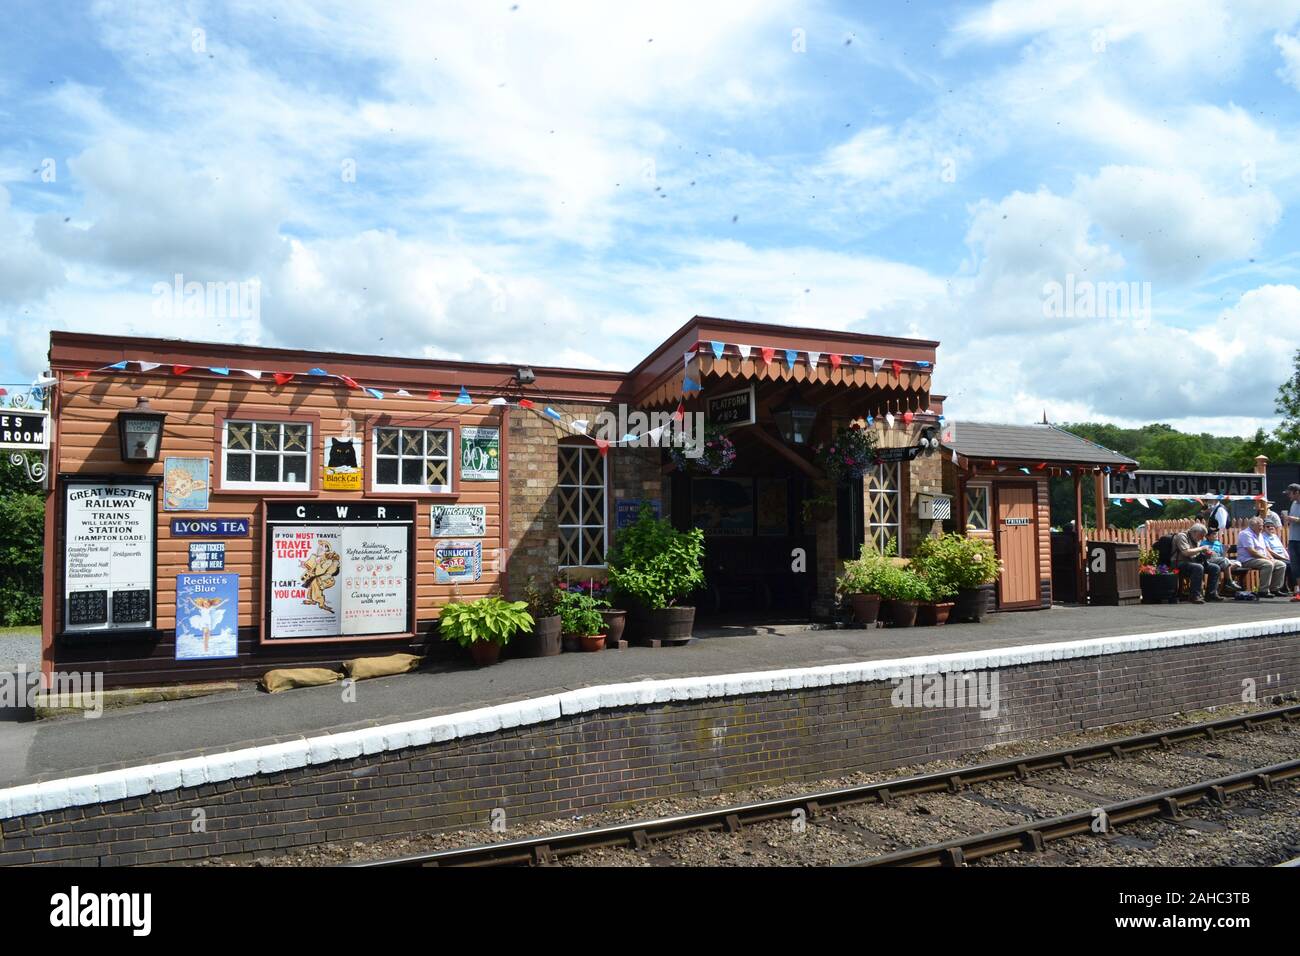 Hampton Loade Station, on the Severn Valley Railway, Shropshire, UK Stock Photo